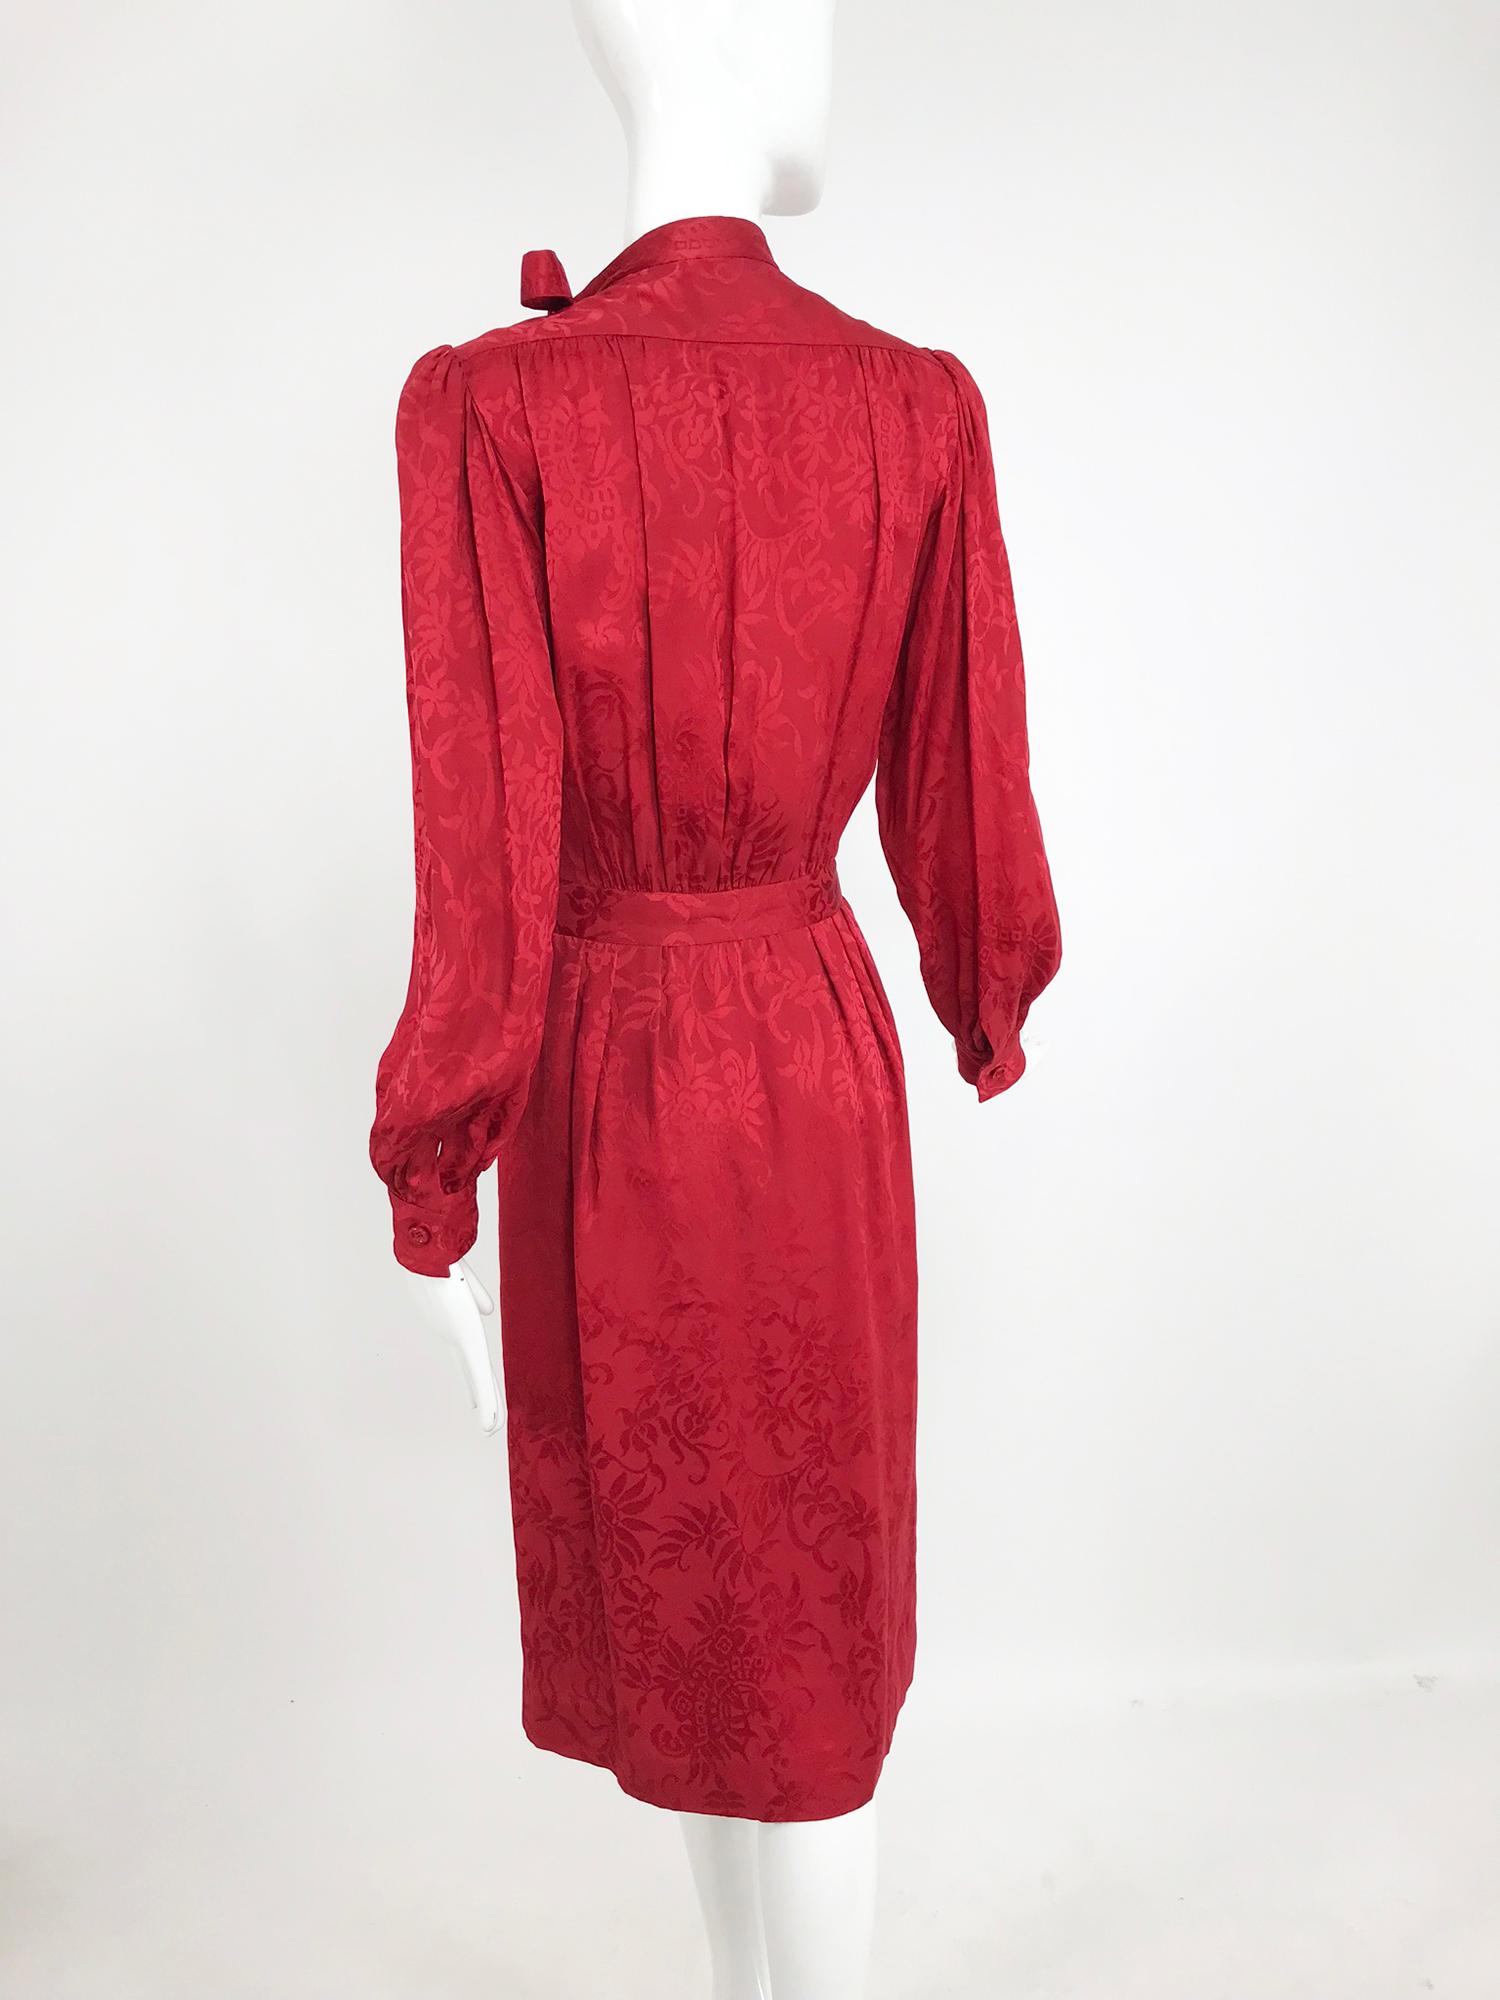 Yves Saint Laurent Red Silk Jacquard Bow Tie Dress 1970s 7